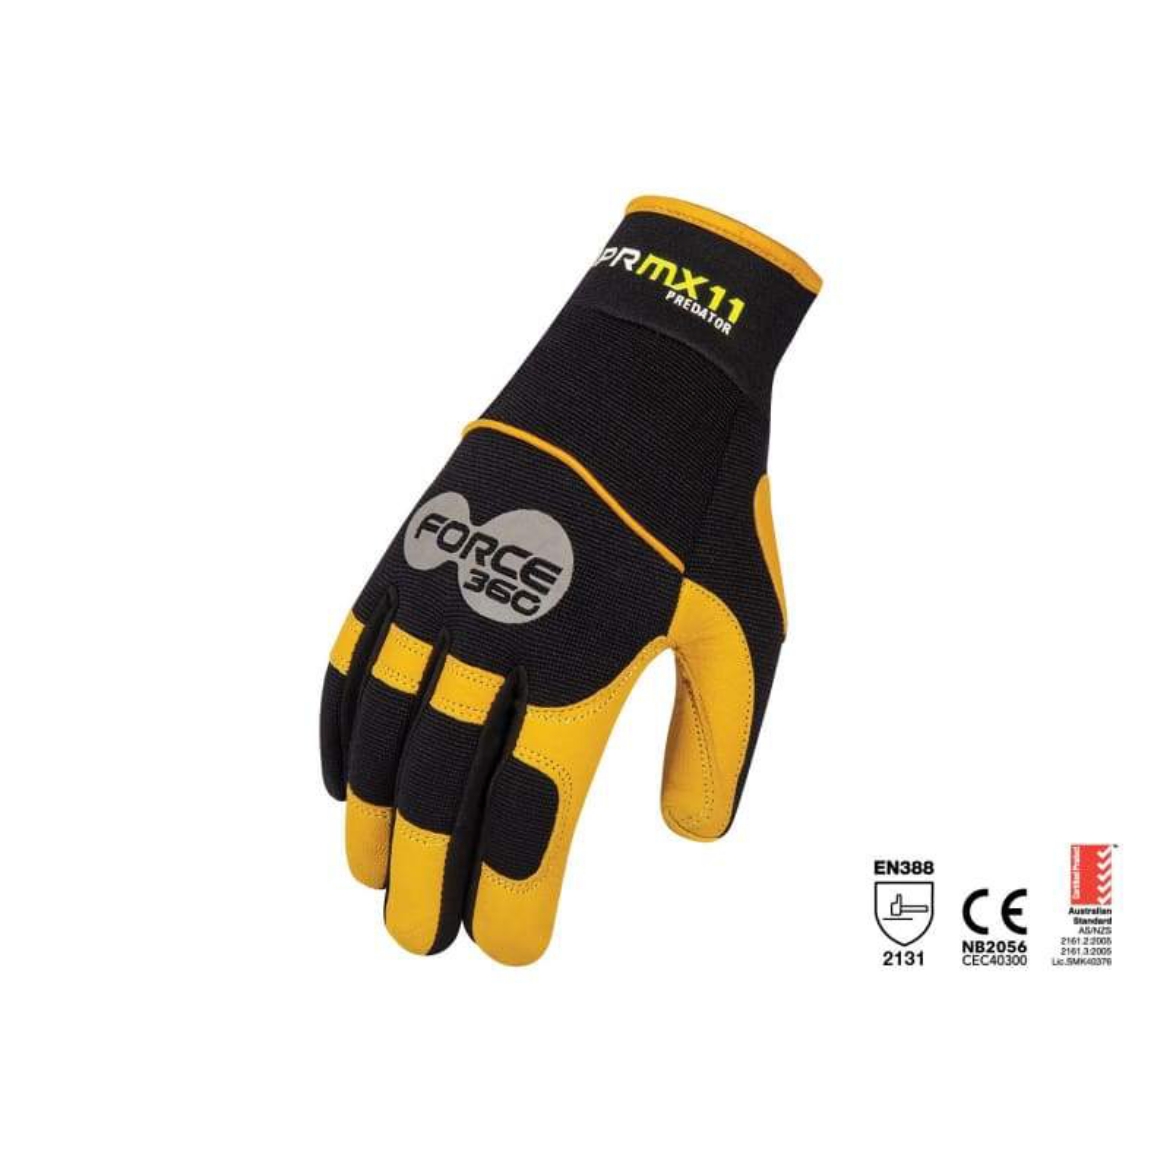 Picture of Force360 MX11 Predator Deerskin Mechanics Glove